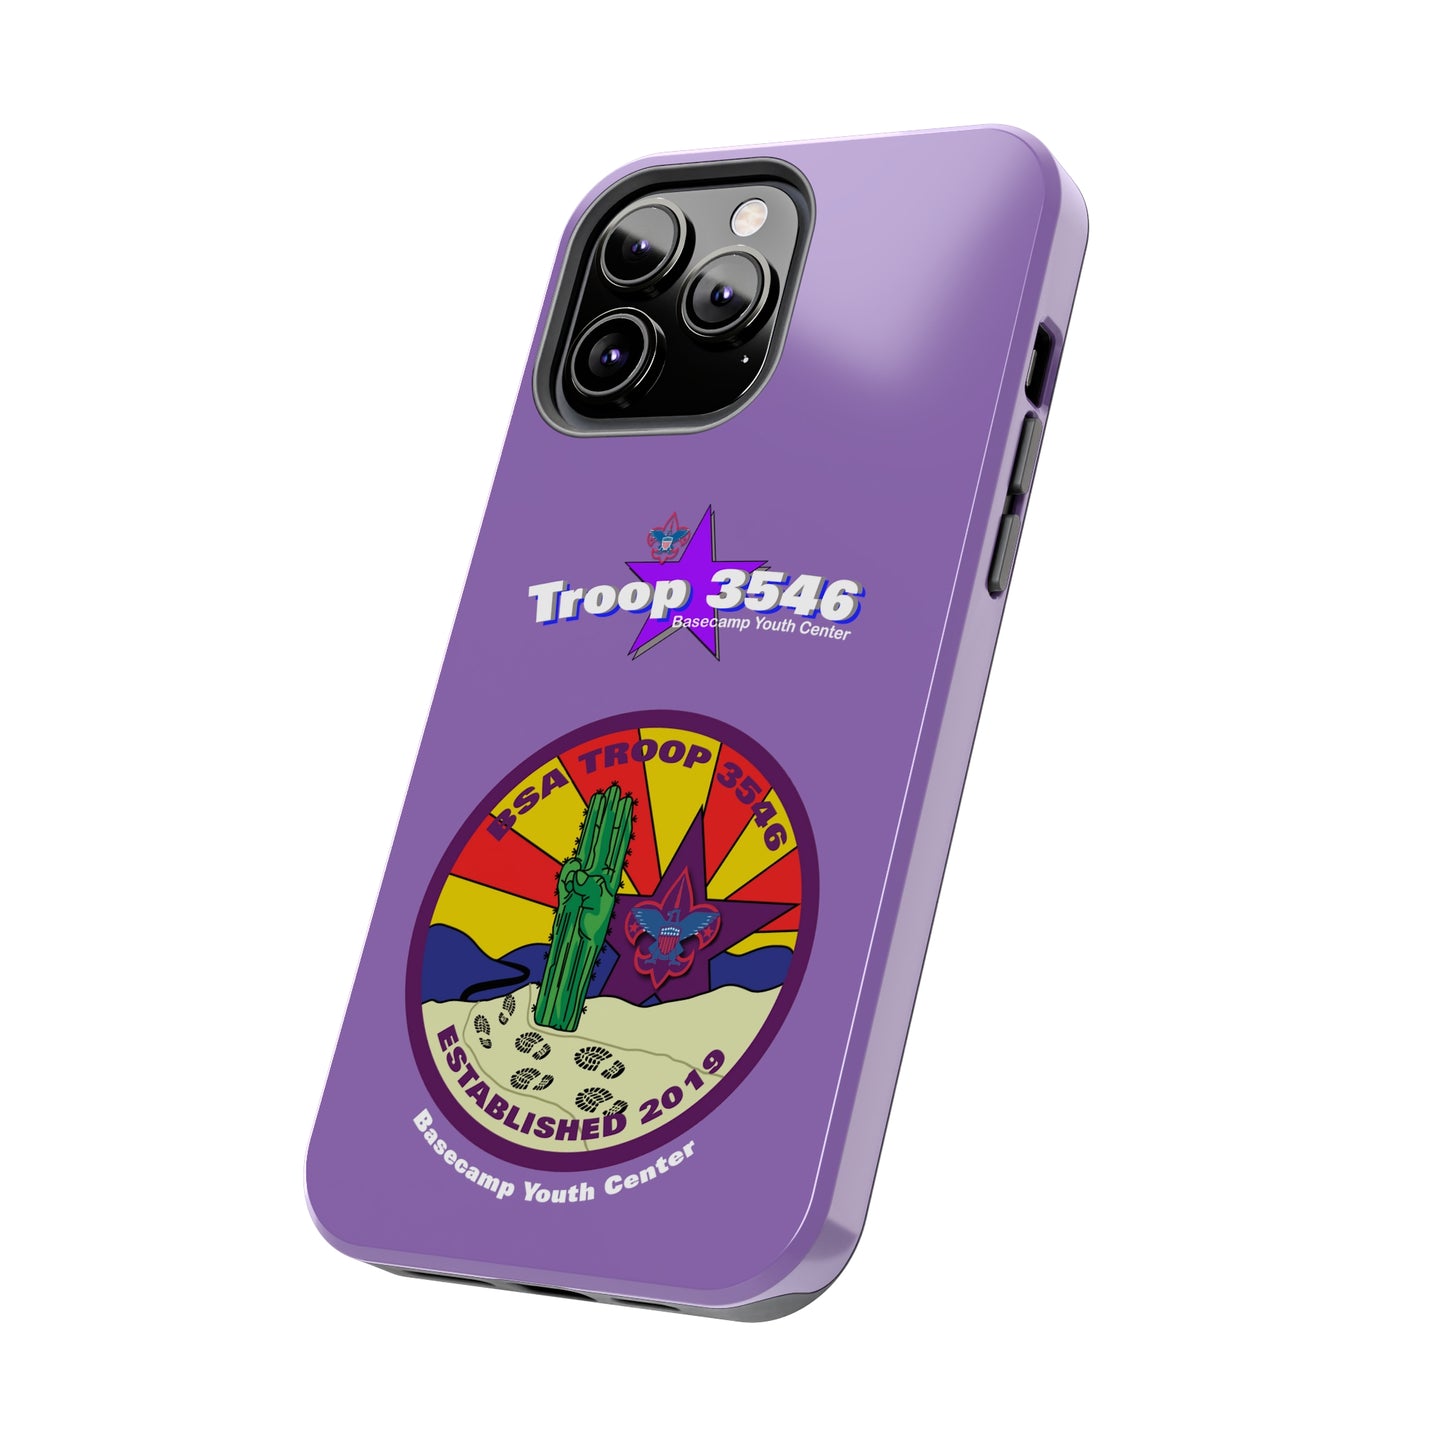 Troop 3546 - Tough Phone Cases